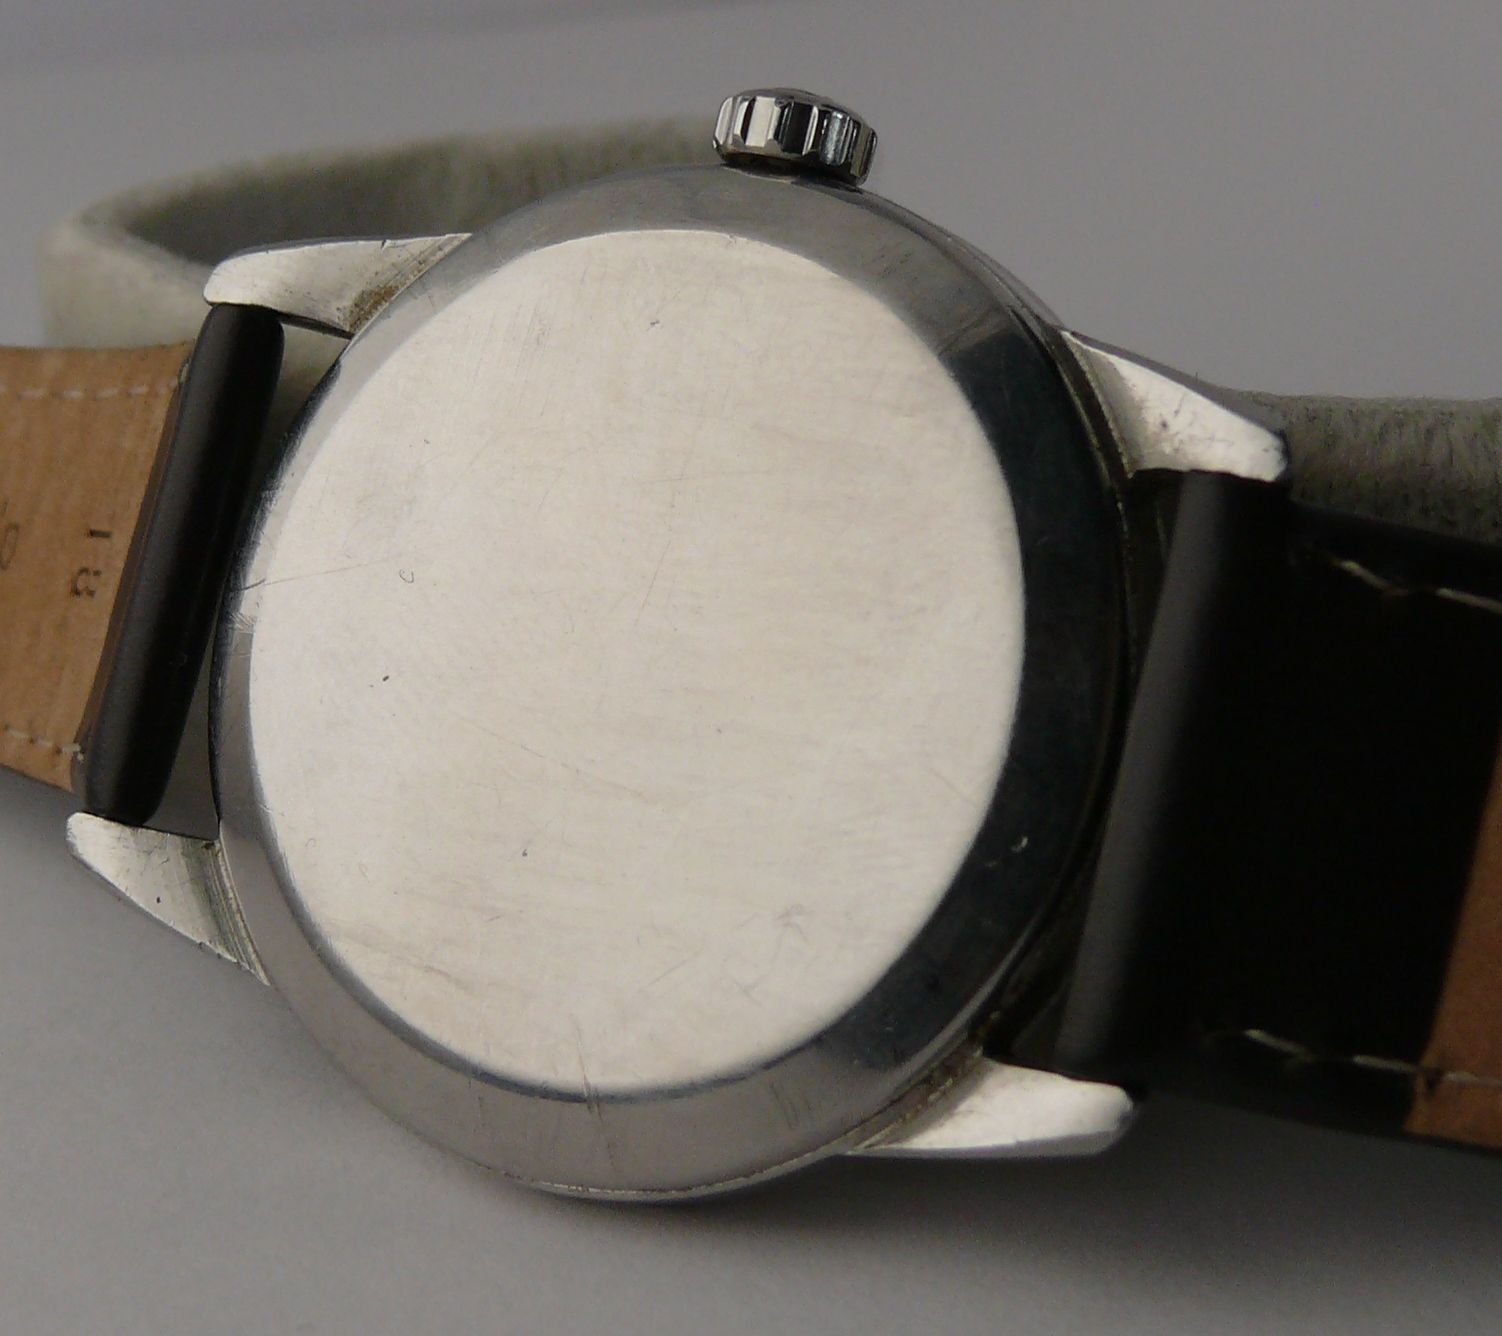 1959 Vintage Gents Omega Geneva Manual Wind Wristwatch Ref 2903. Original dial shows even patina - Image 4 of 7